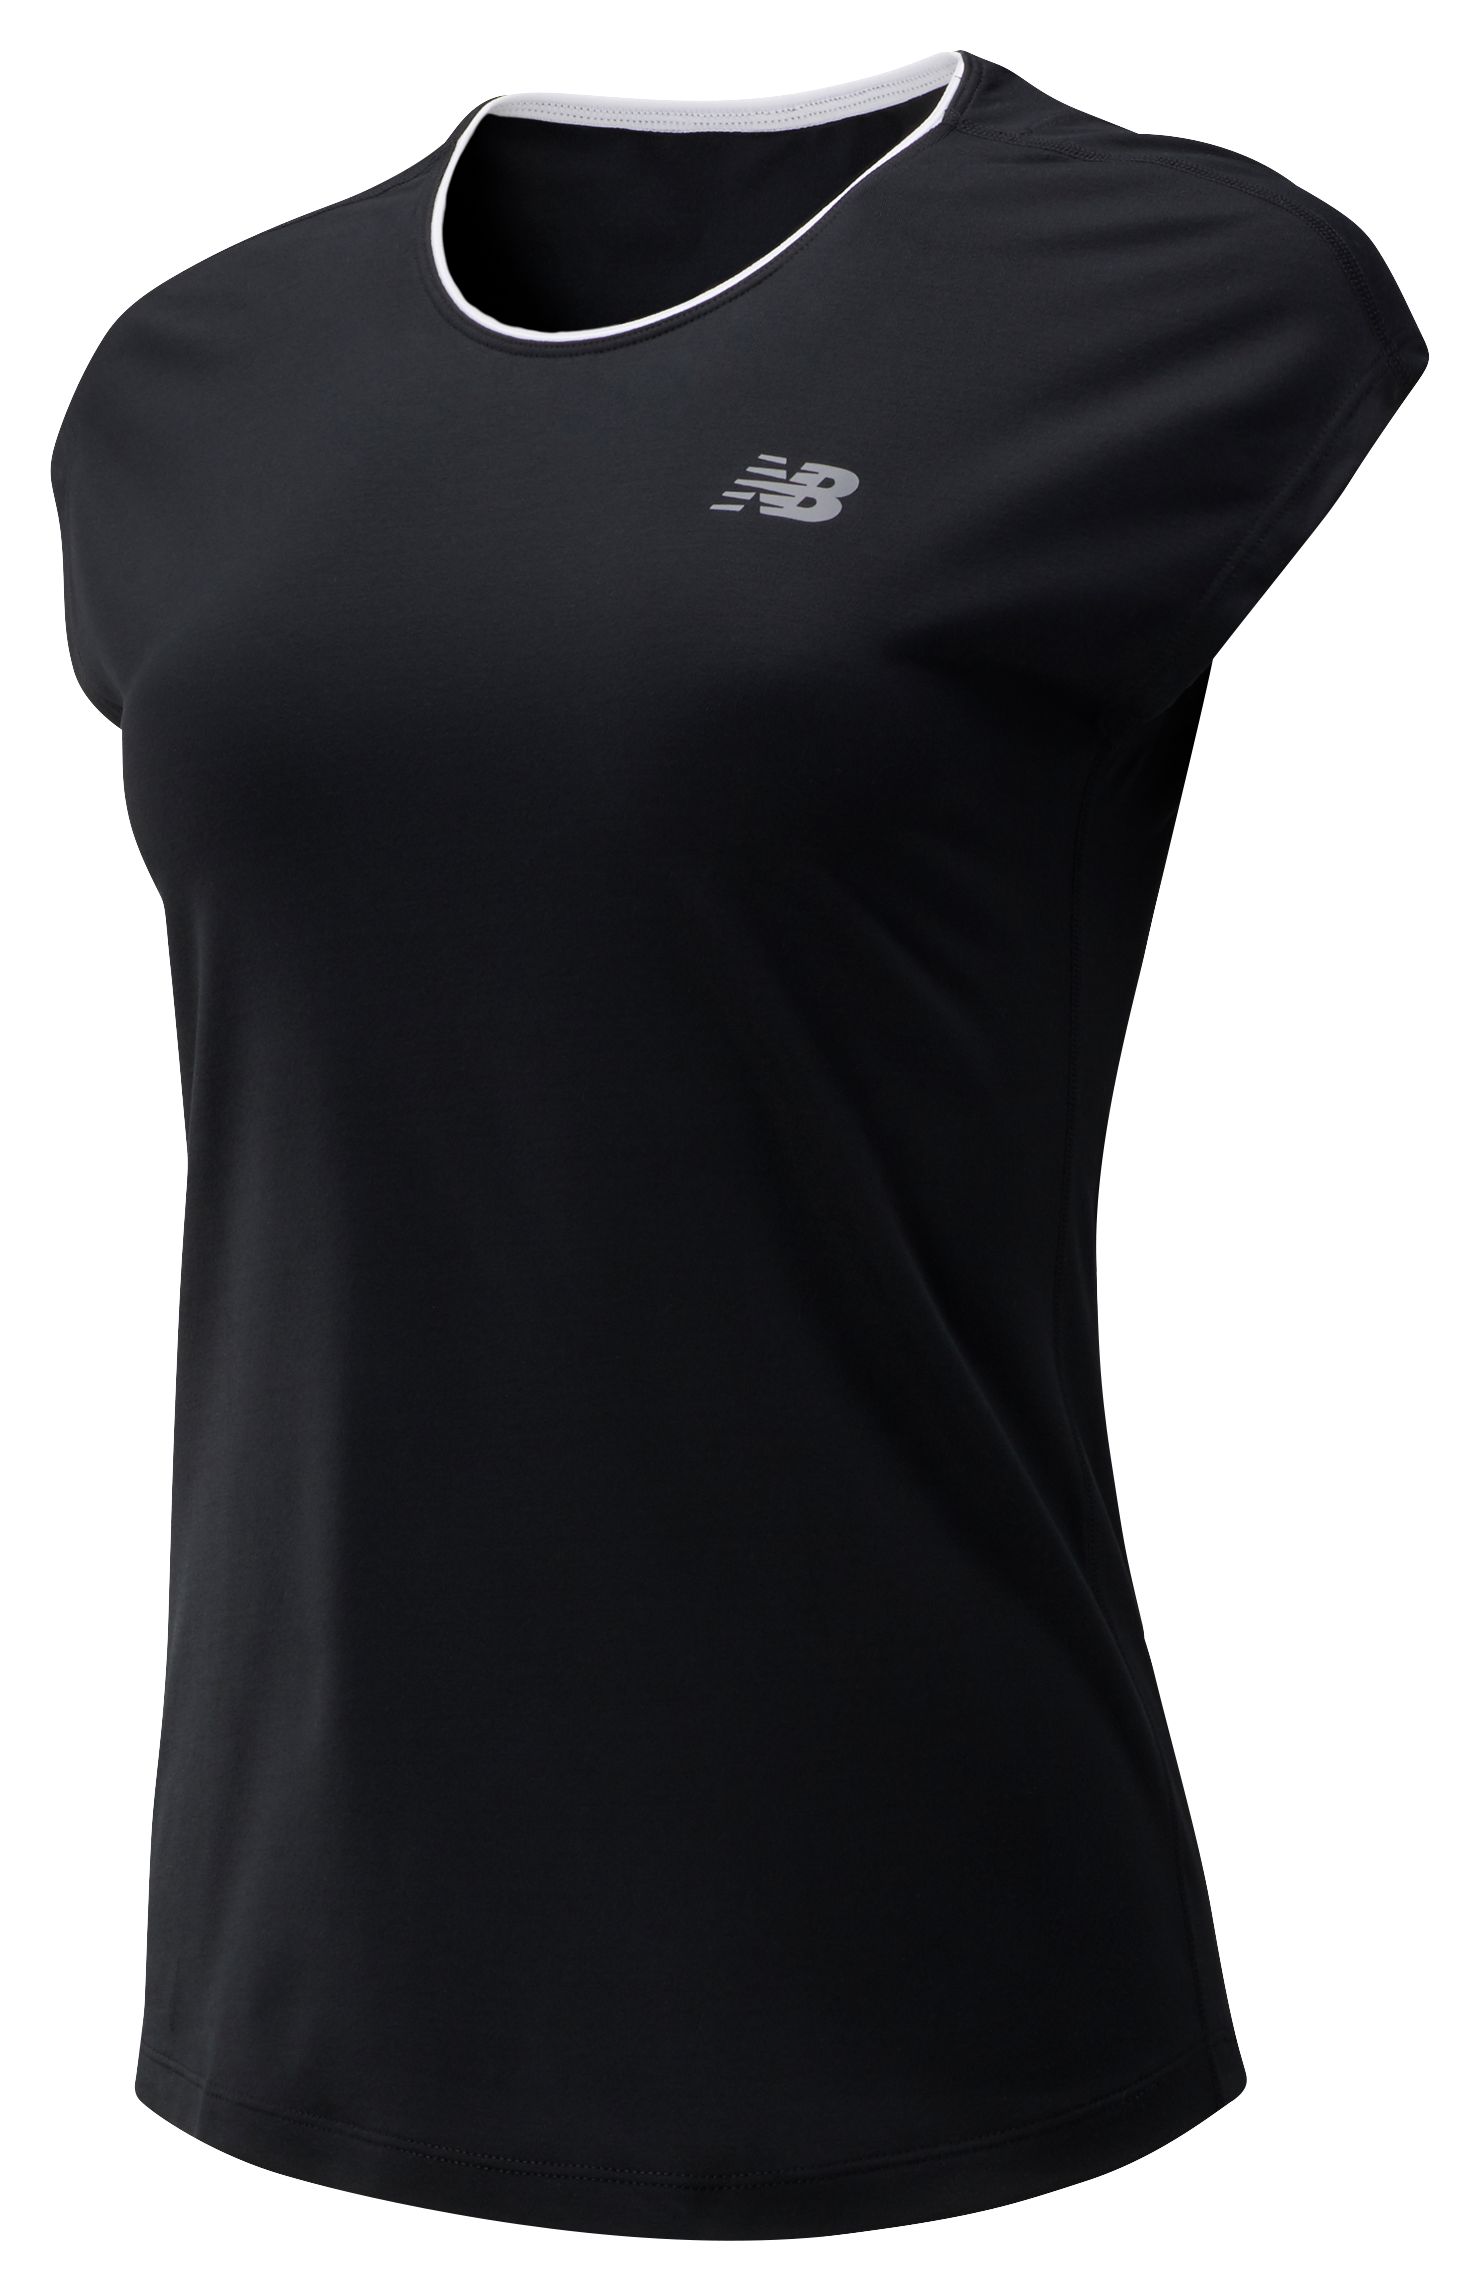 Women's Short Sleeve Shirts - New Balance